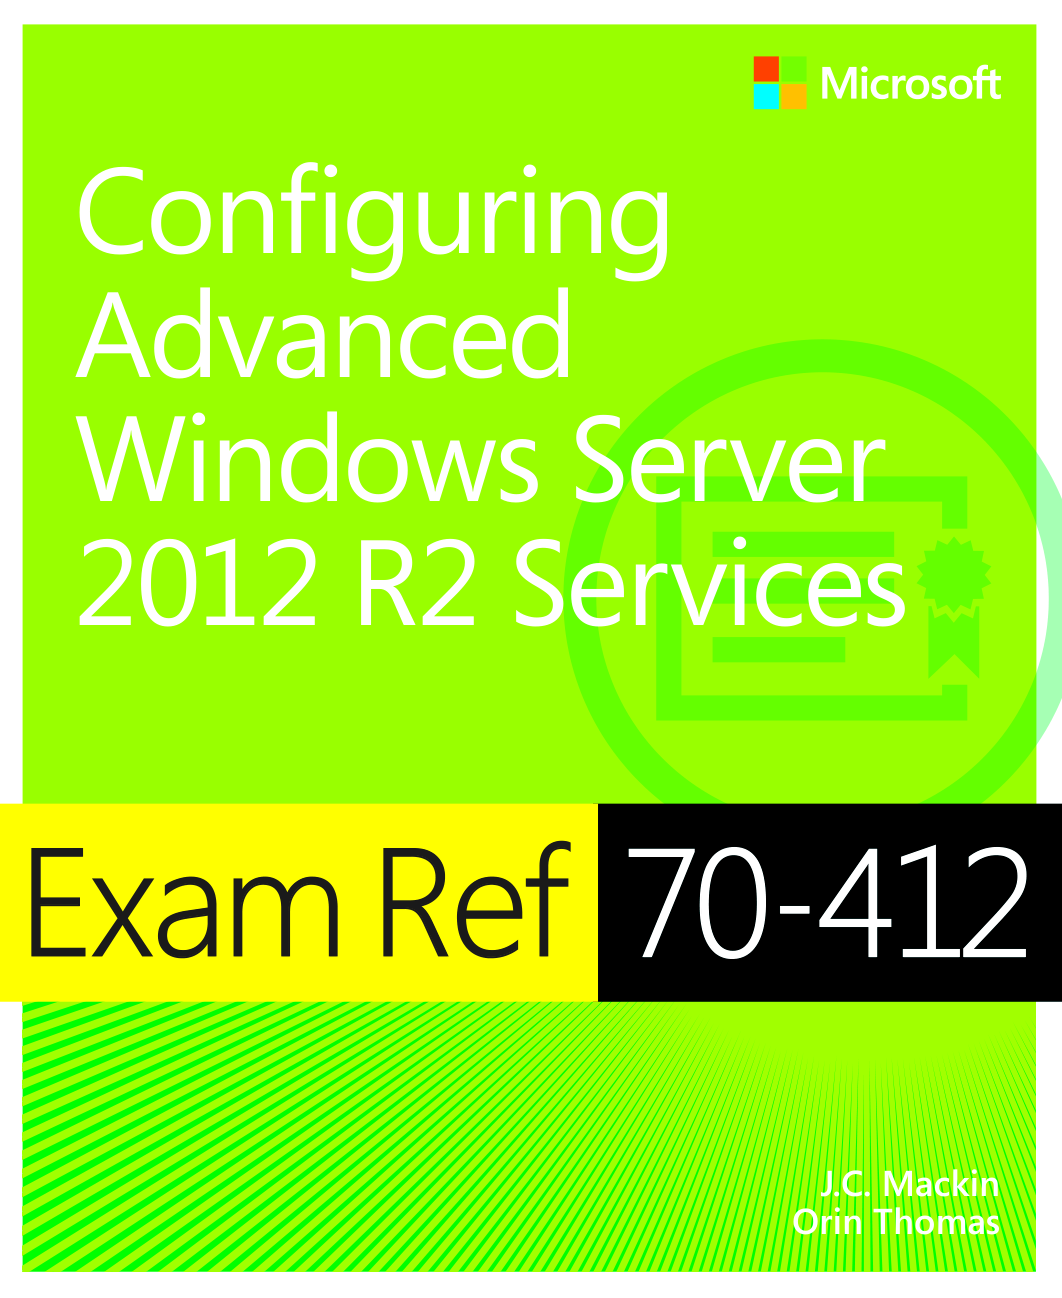 Exam-Ref-70-412-Configure-Advanced-Windows-Server-2012-R2-Services.png